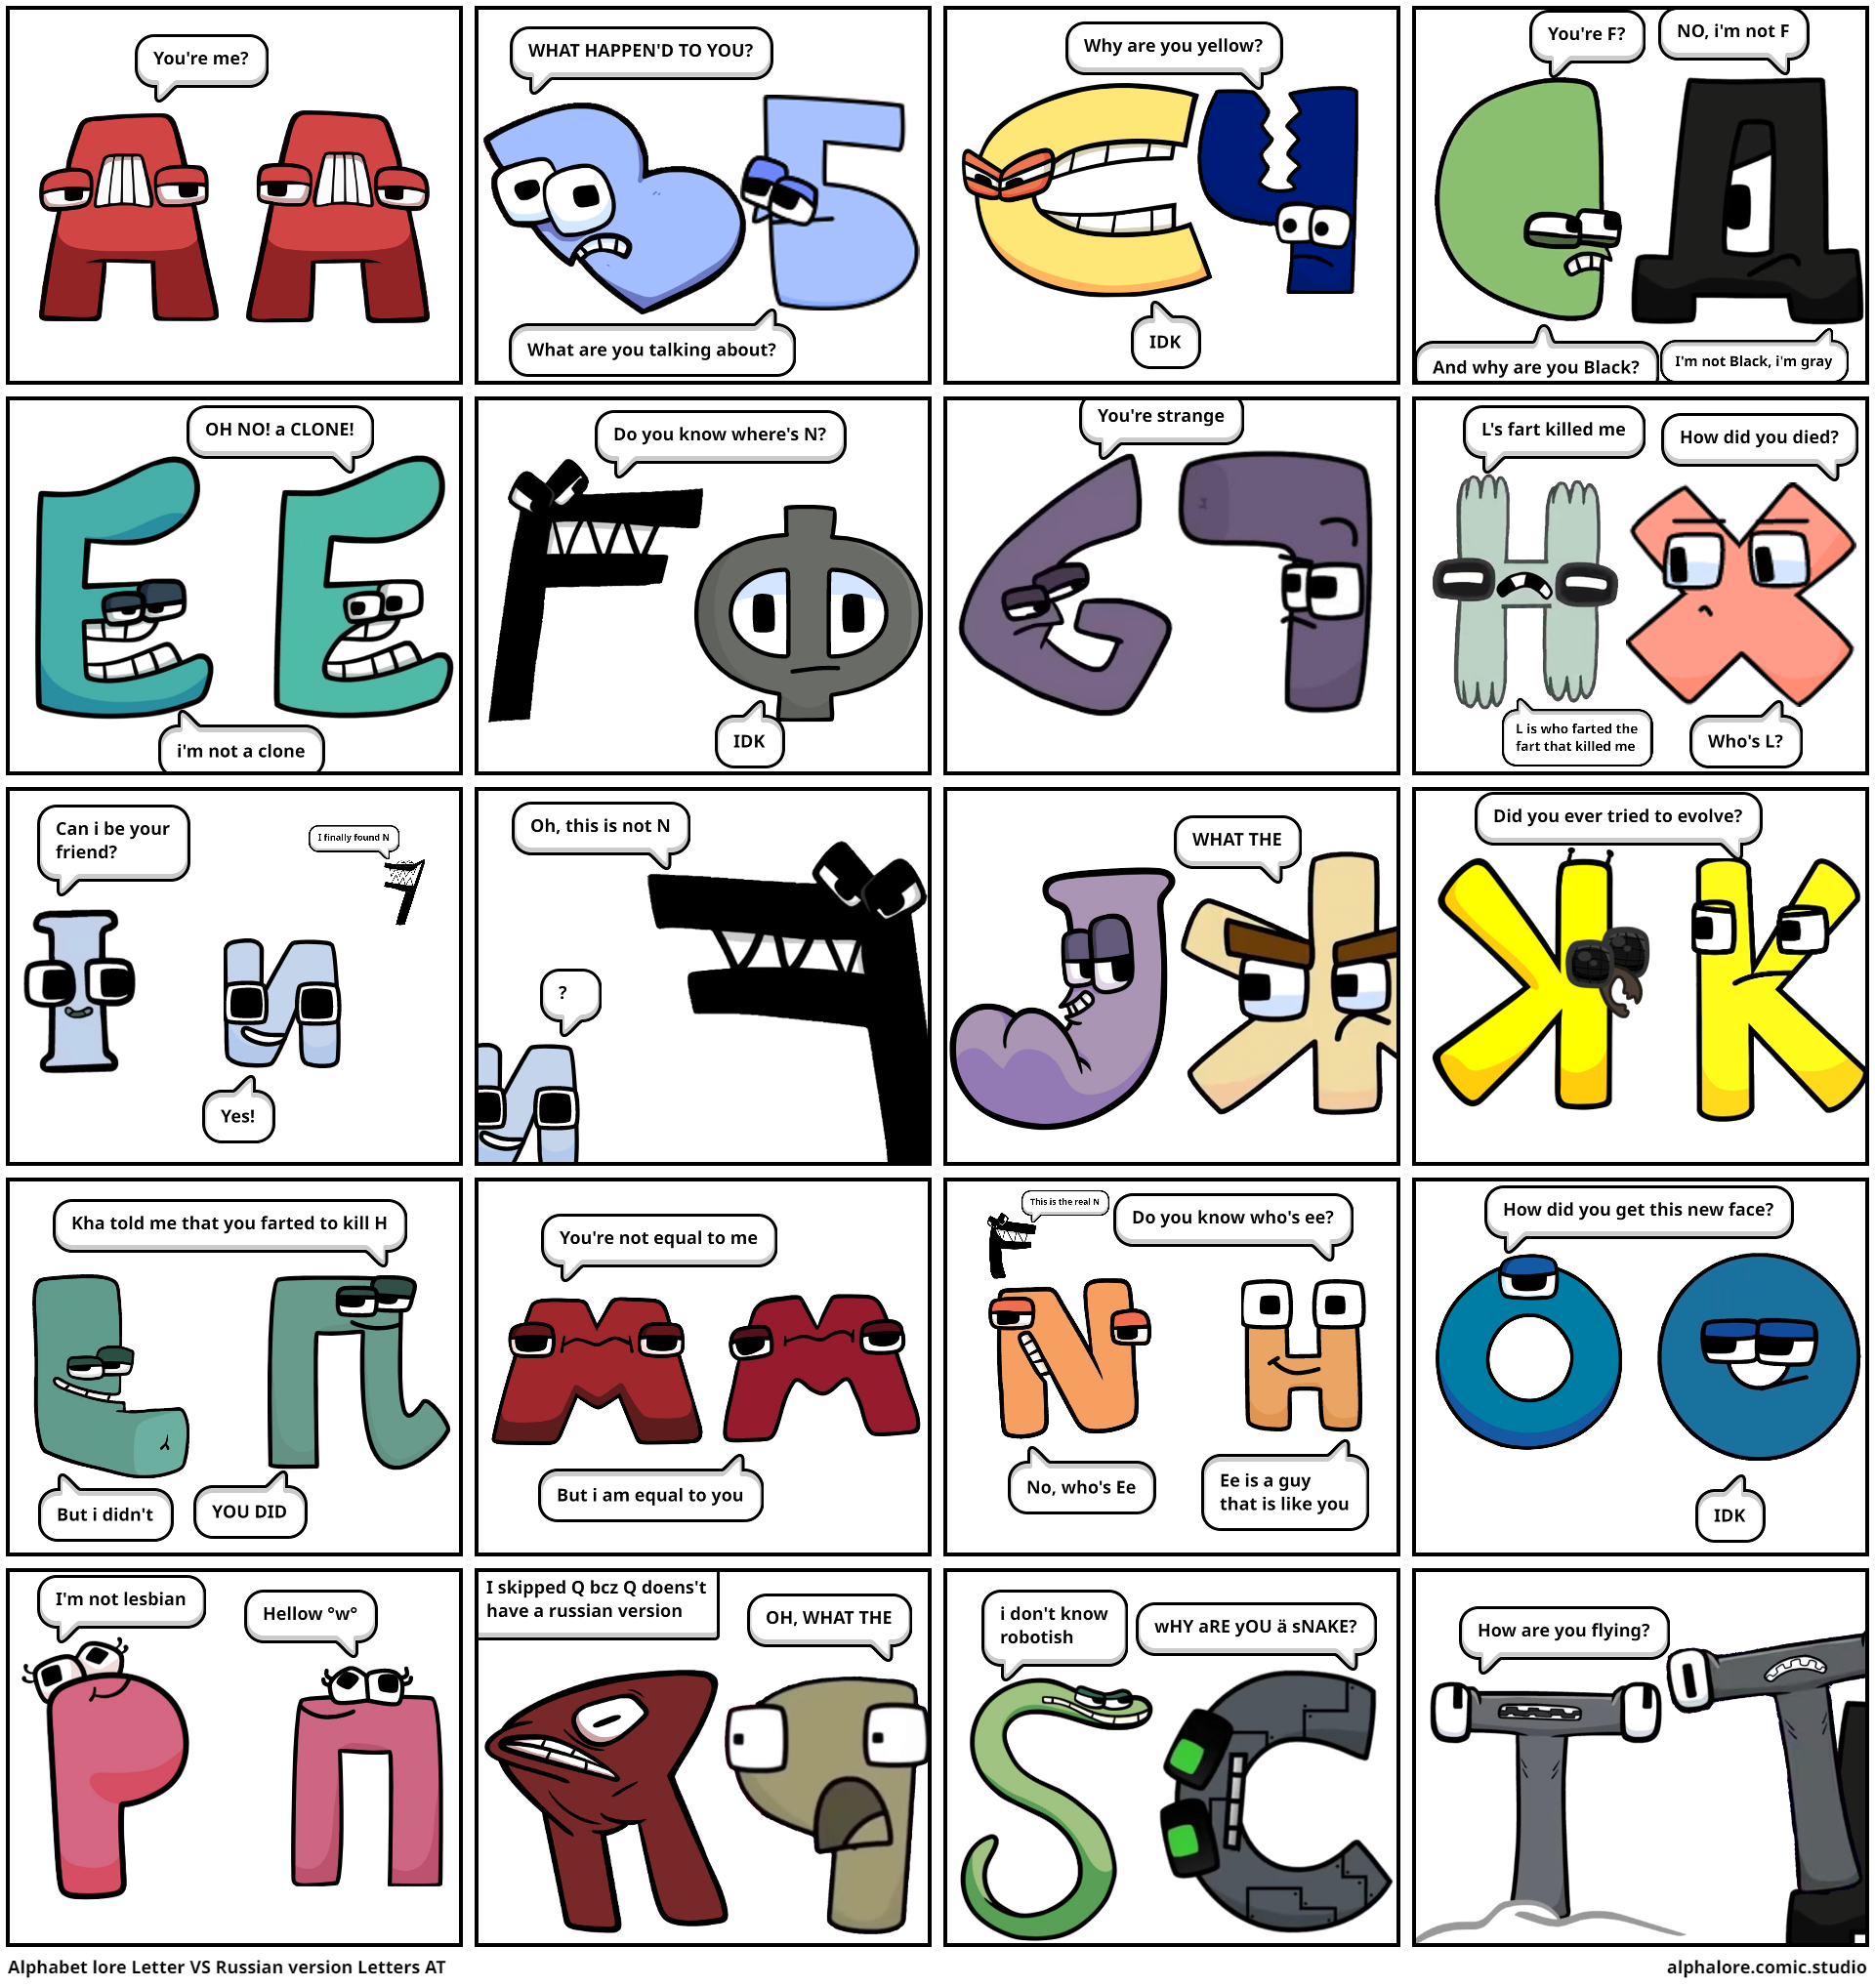 Alphabet lore Letter VS Russian version Letters AT - Comic Studio